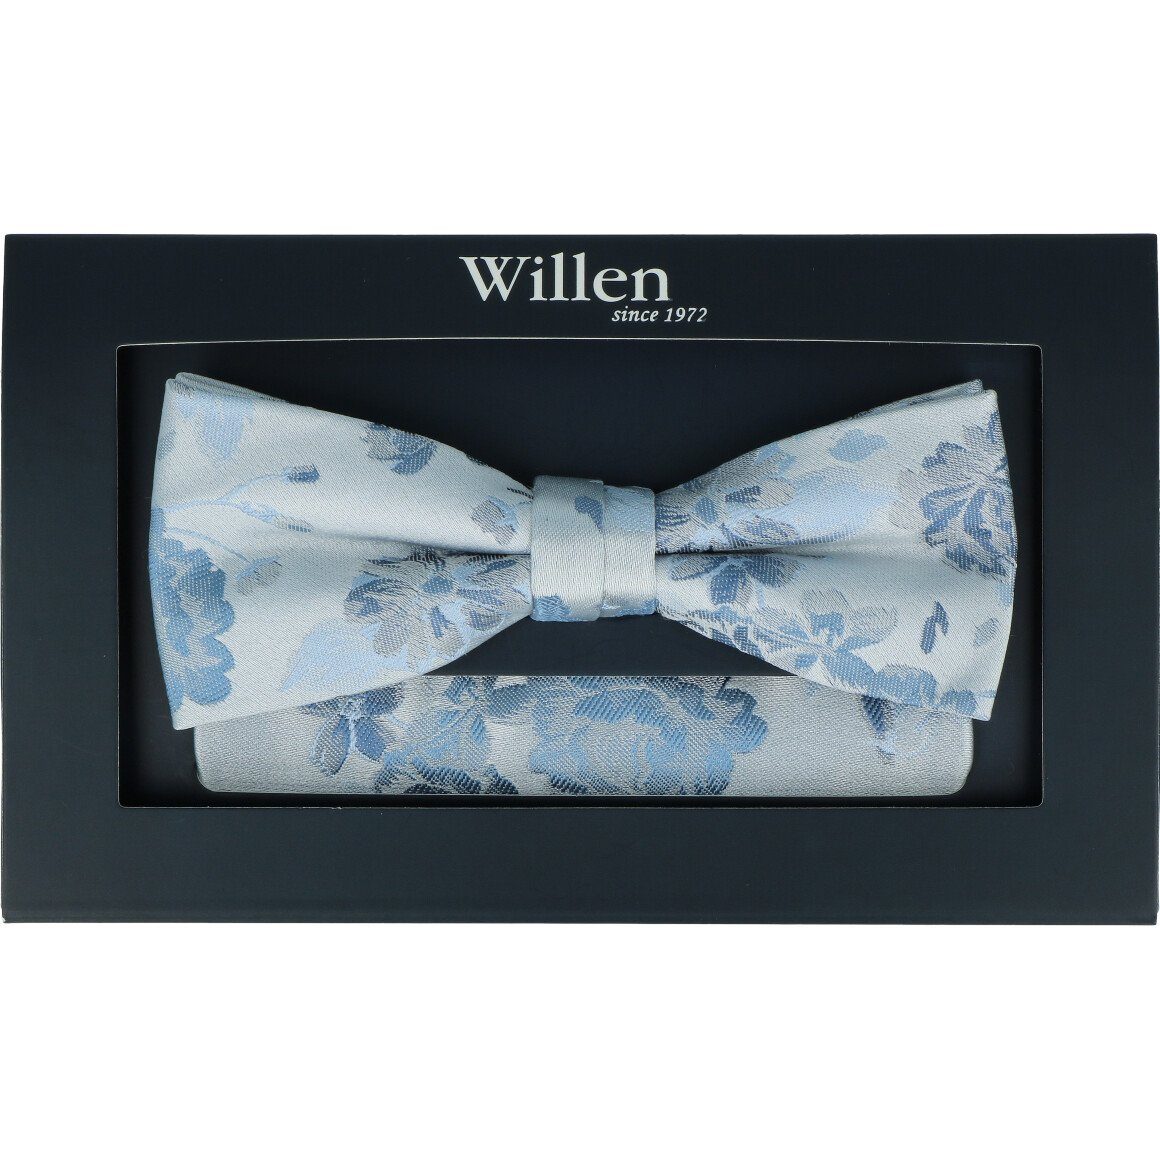 WILLEN Weste, Hemd & Krawatte/Fliege blau